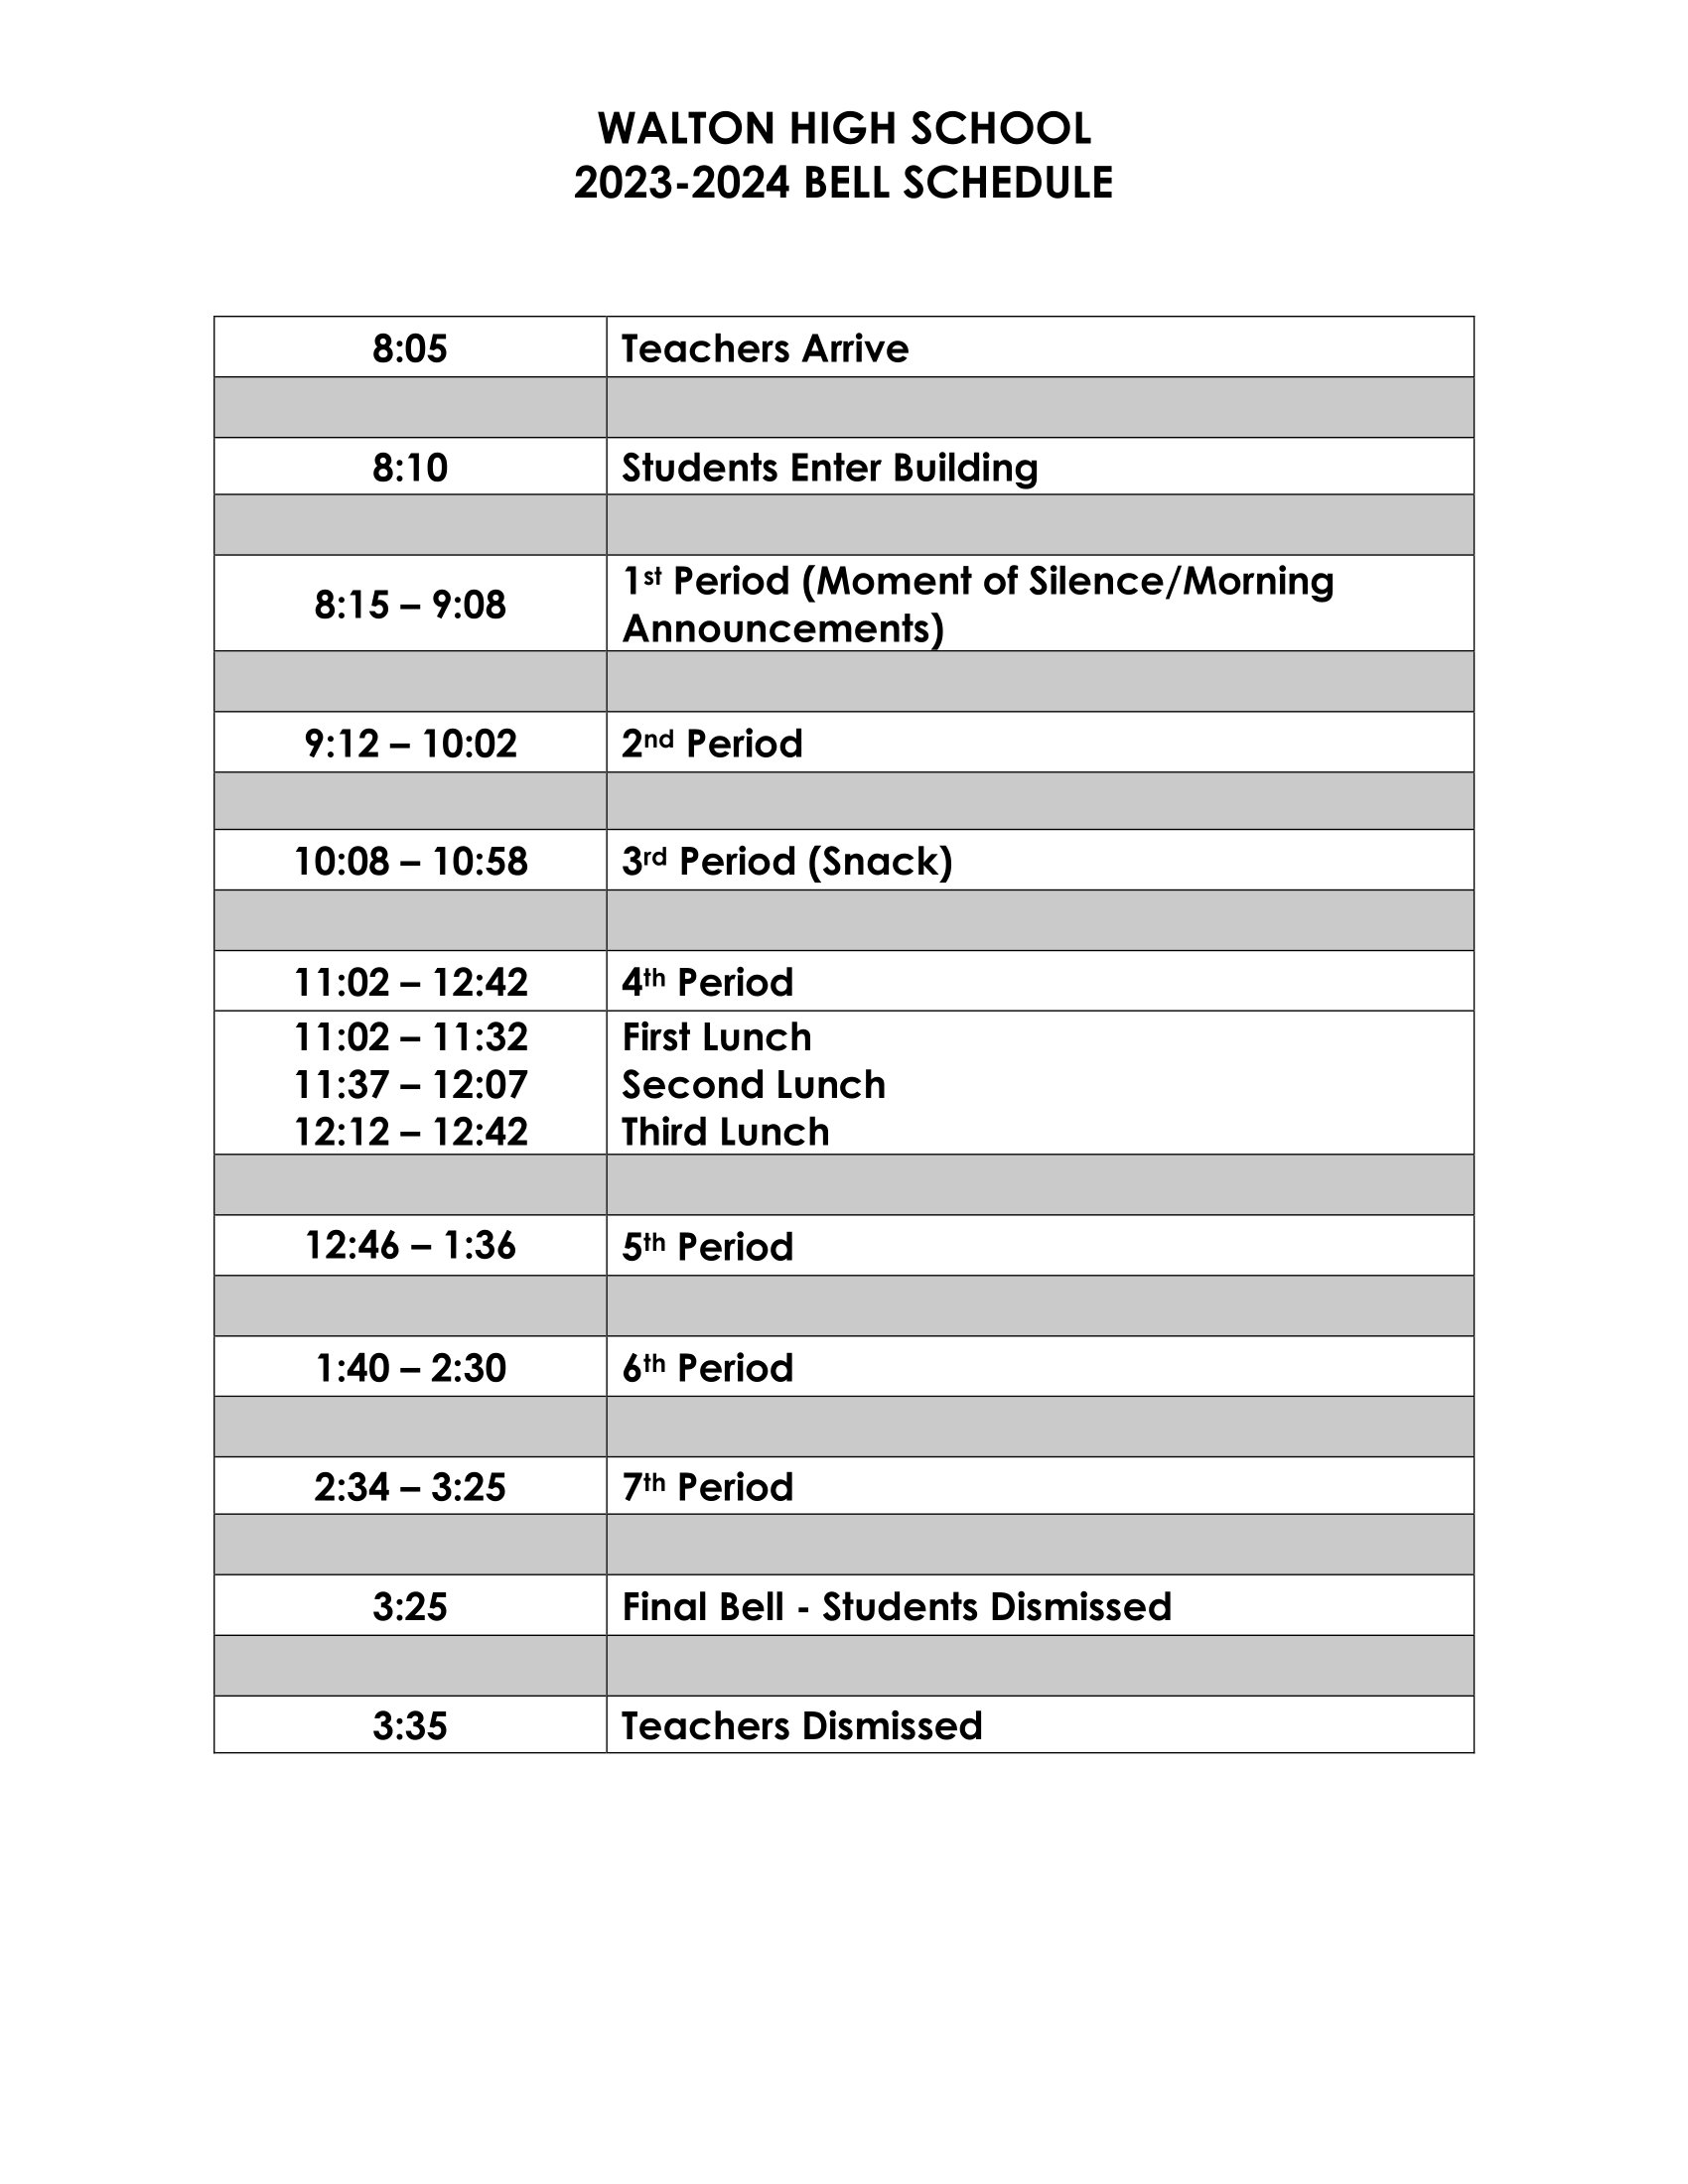 2023-24 Bell Schedule